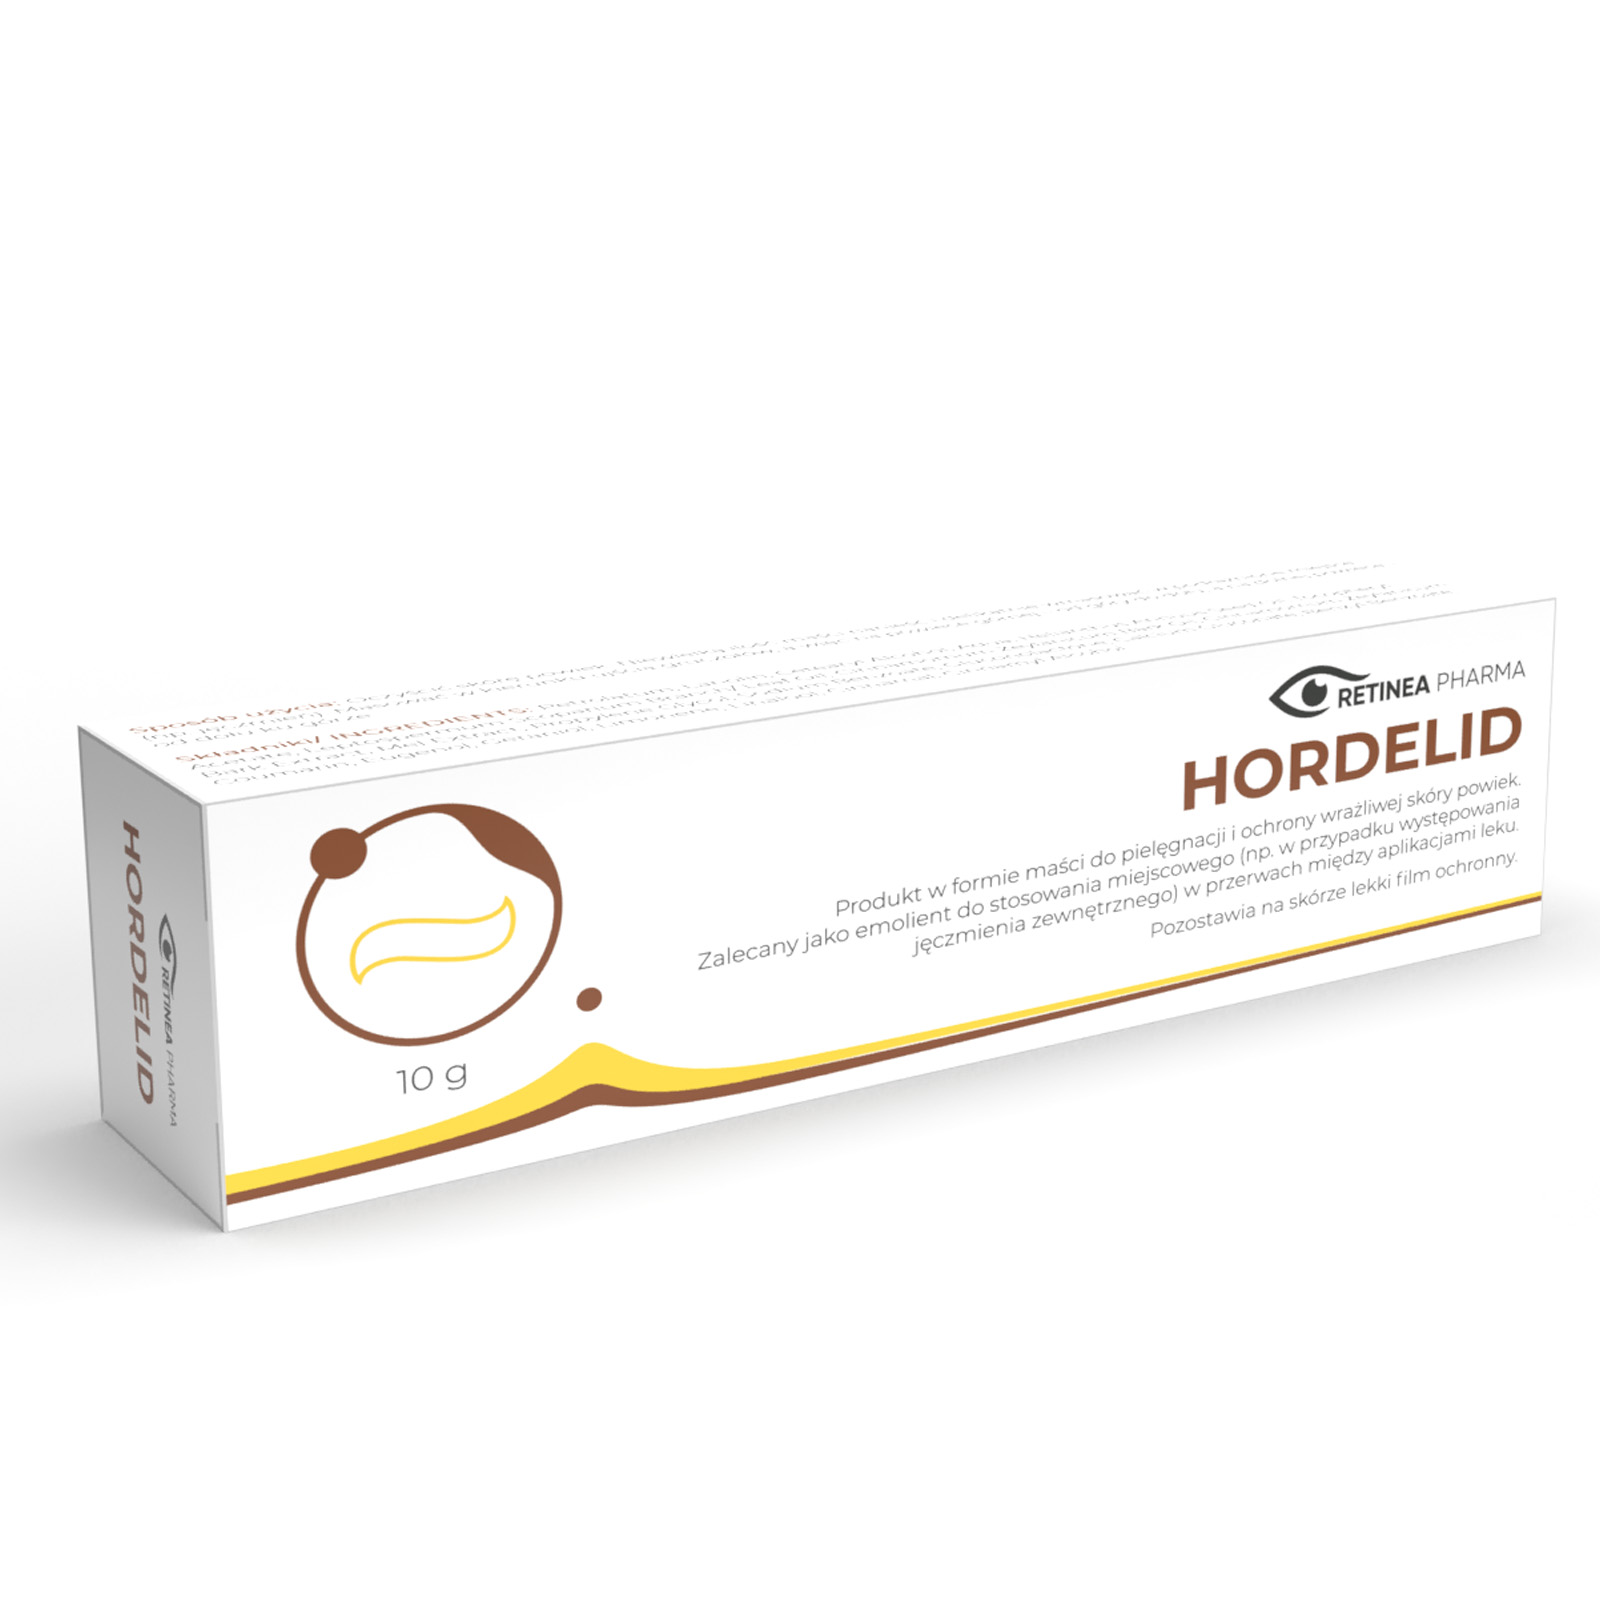  Hordelid Retinea Pharma by Pharm Supply 